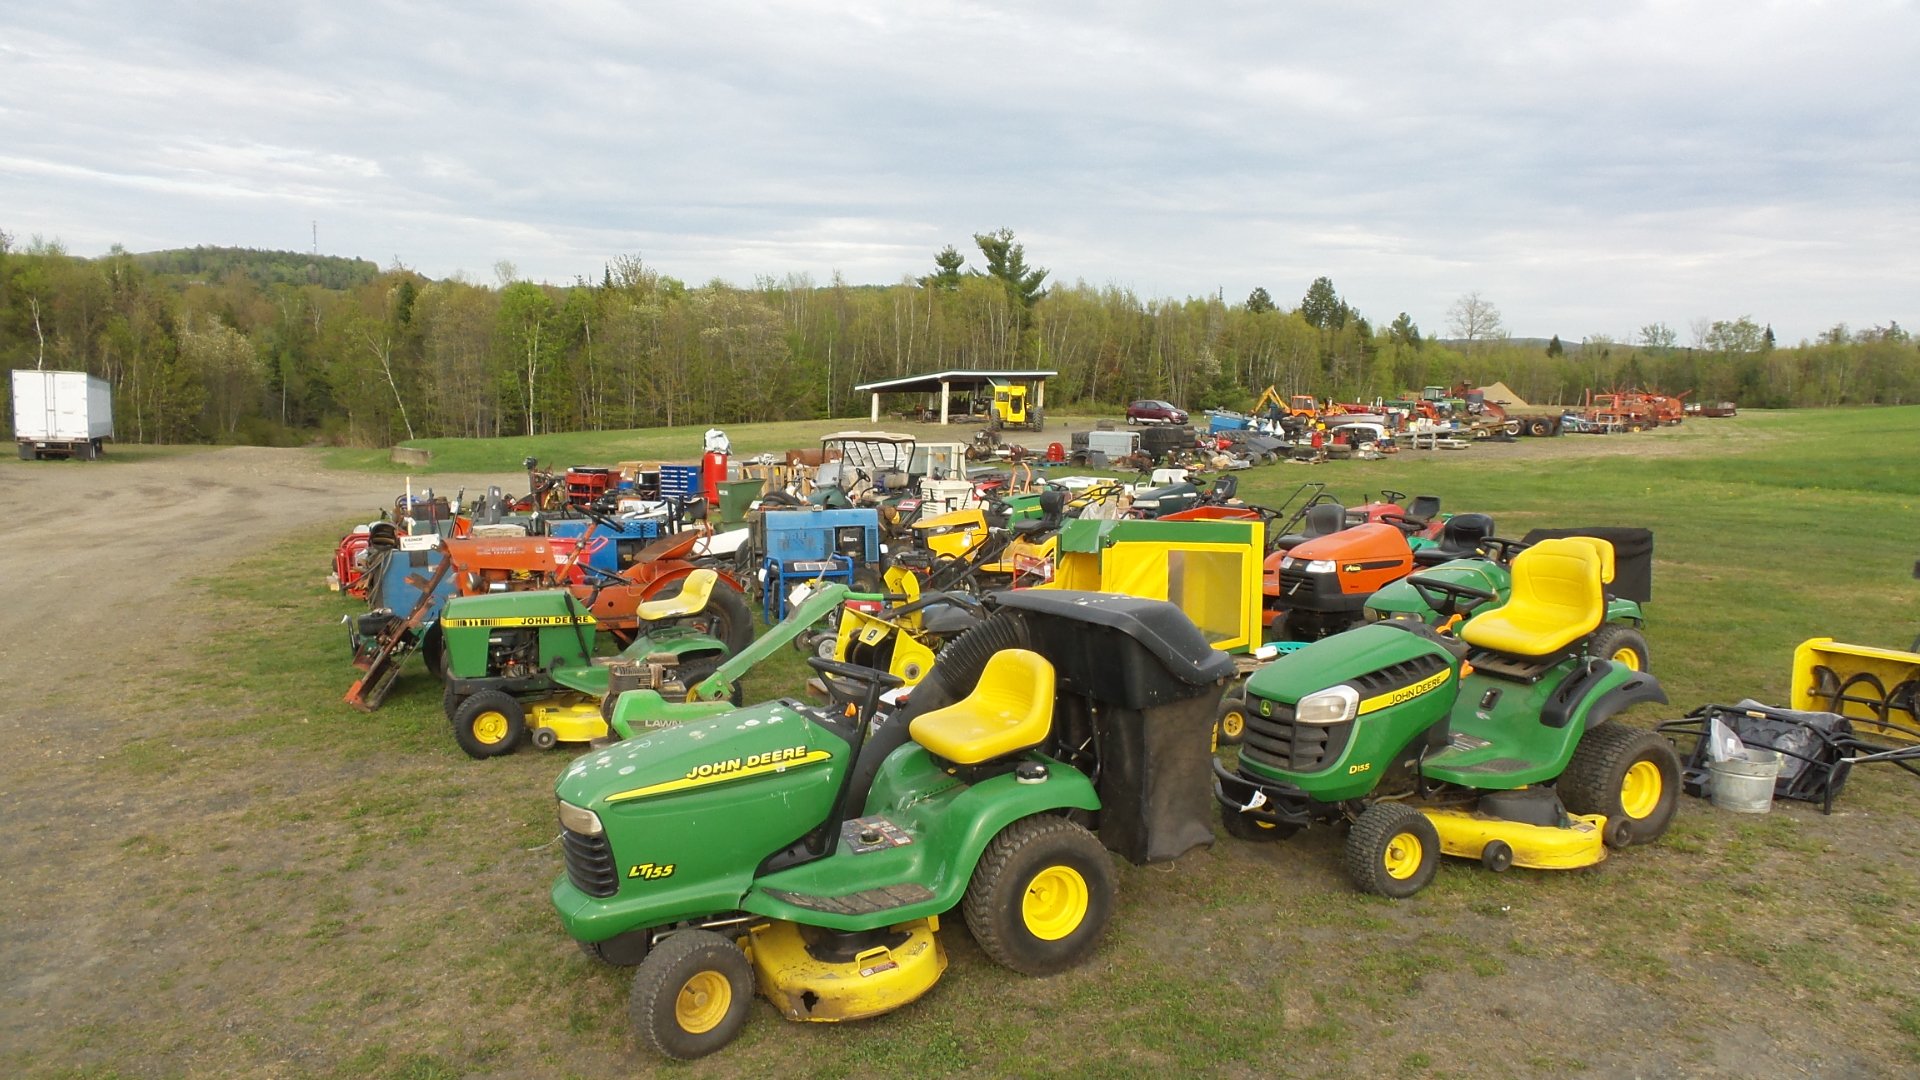 Many Lawn Tractors